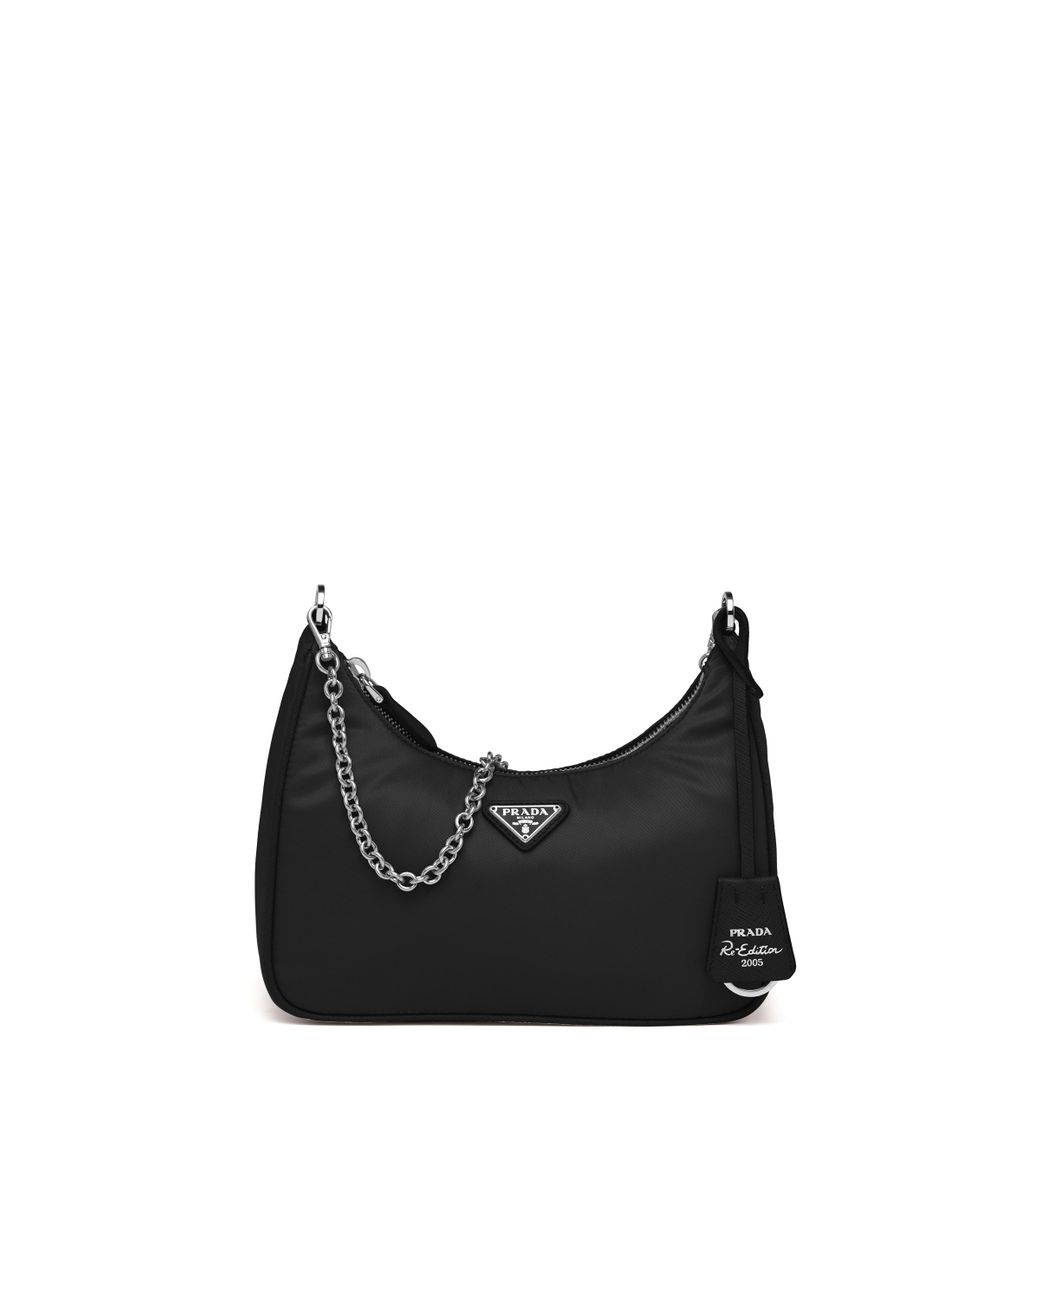 Prada Re-edition 2005 Nylon Bag in Black | Lyst